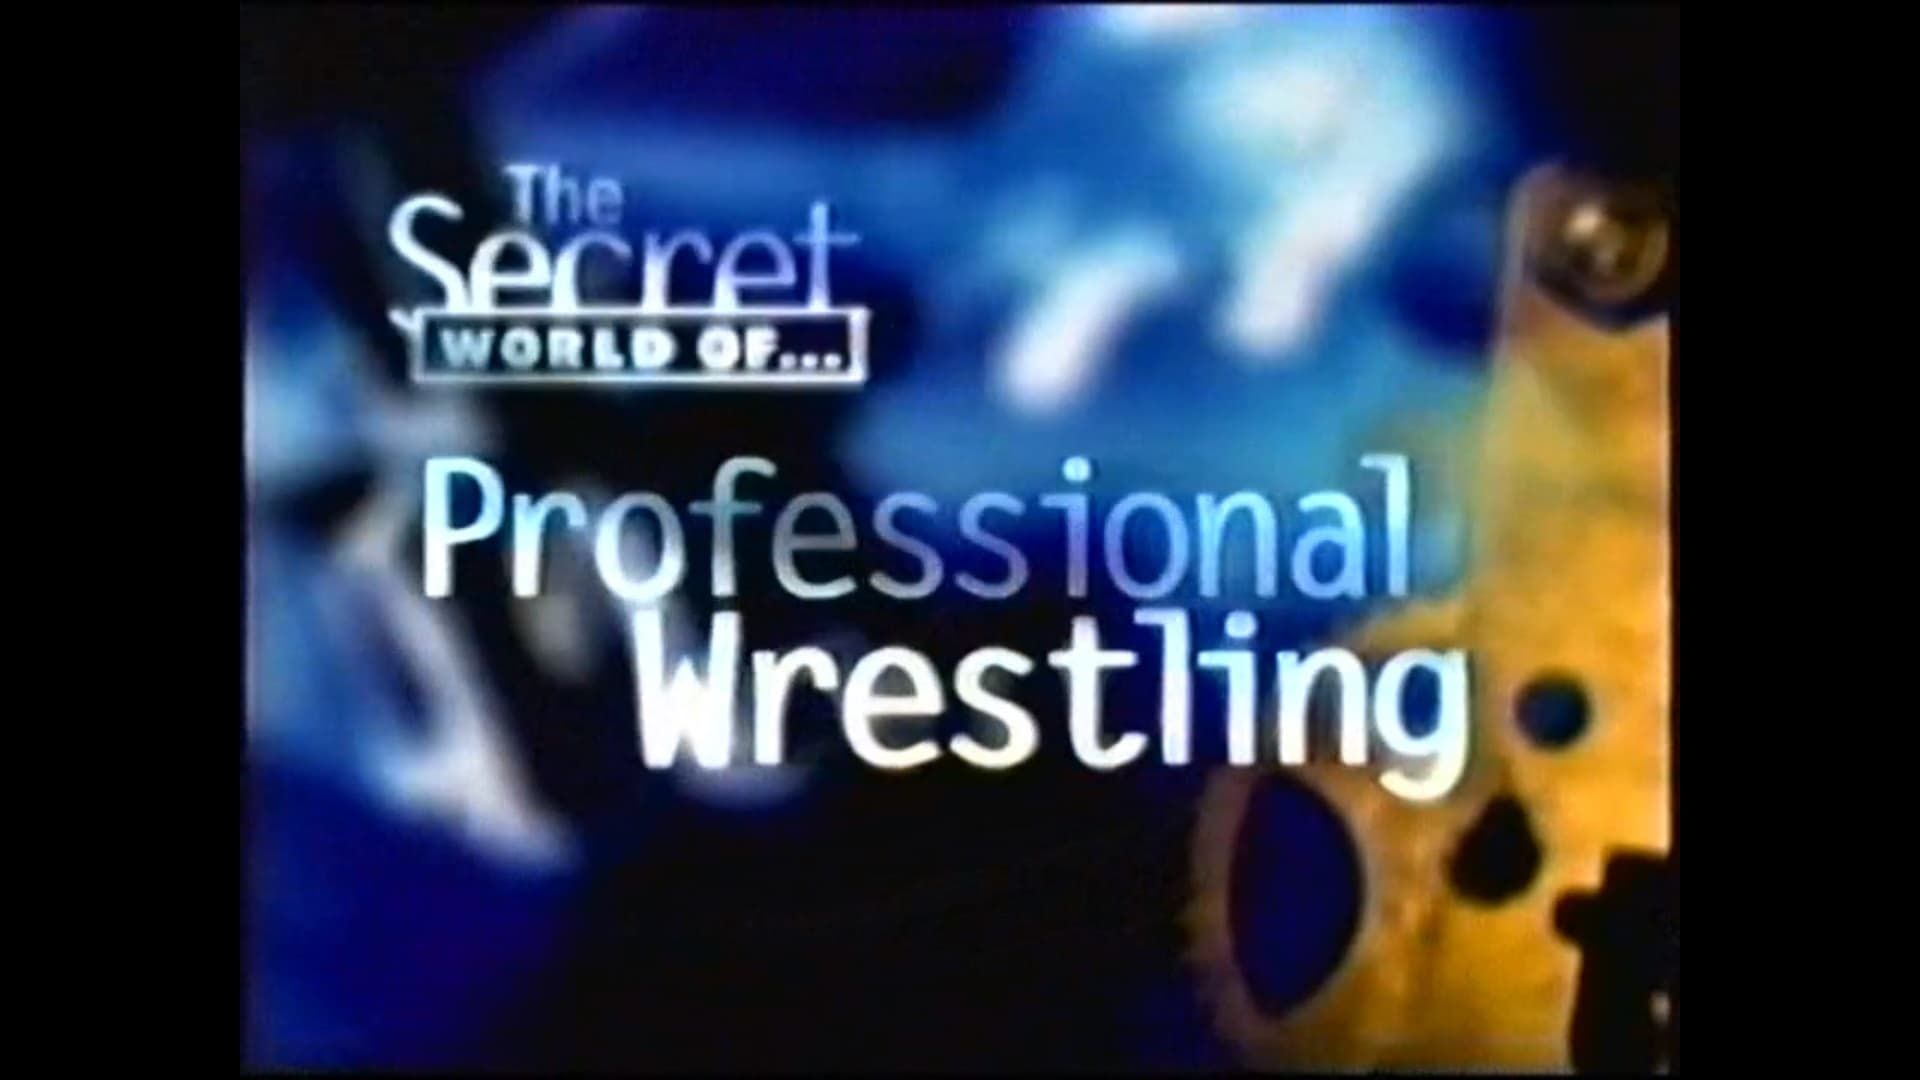 The Secret World of Professional Wrestling background